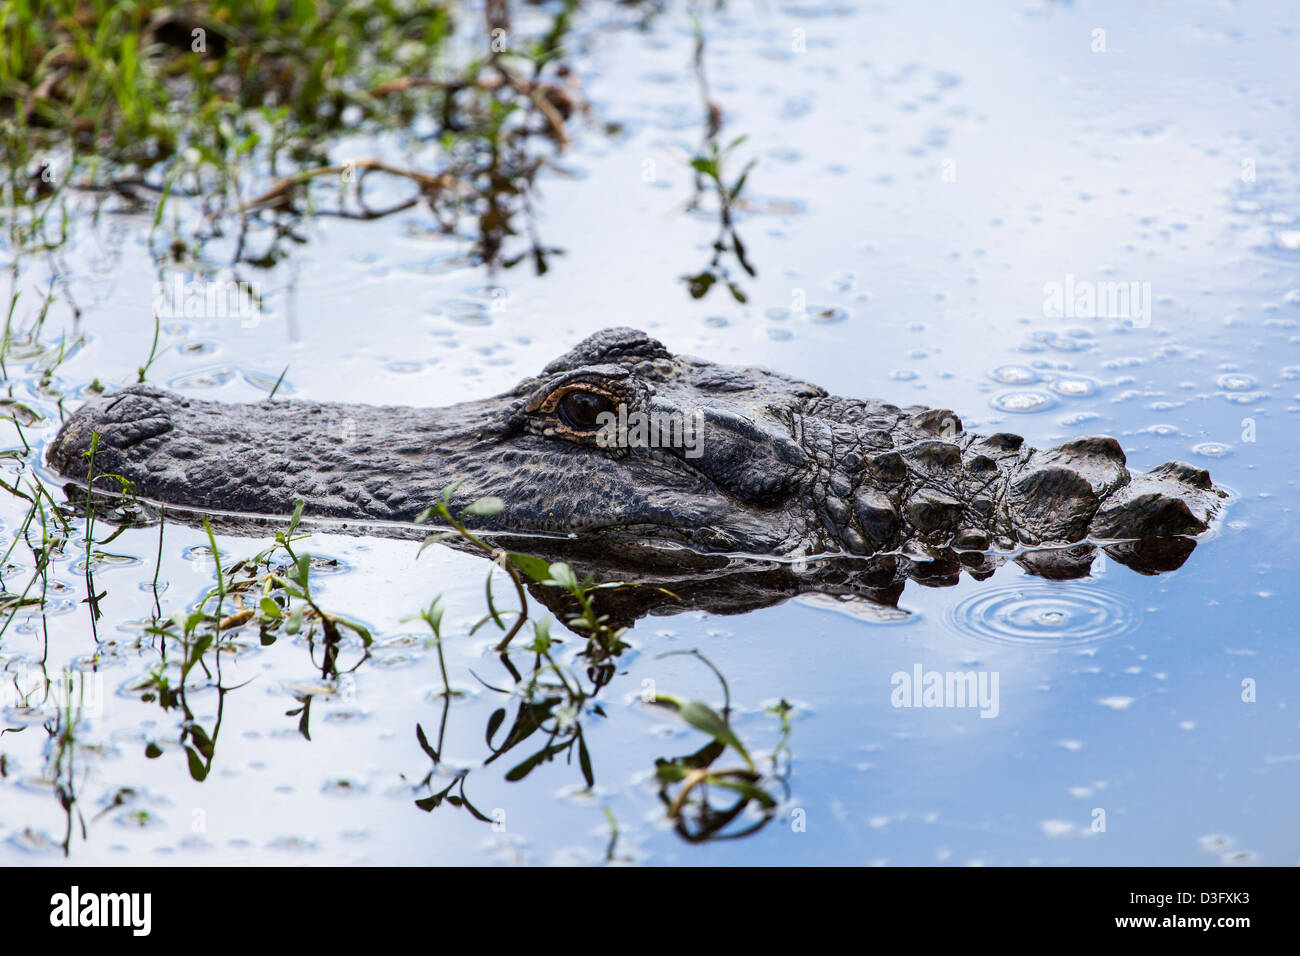 An Alligator (Alligator mississippiensis) in the Everglades, Florida, USA Stock Photo